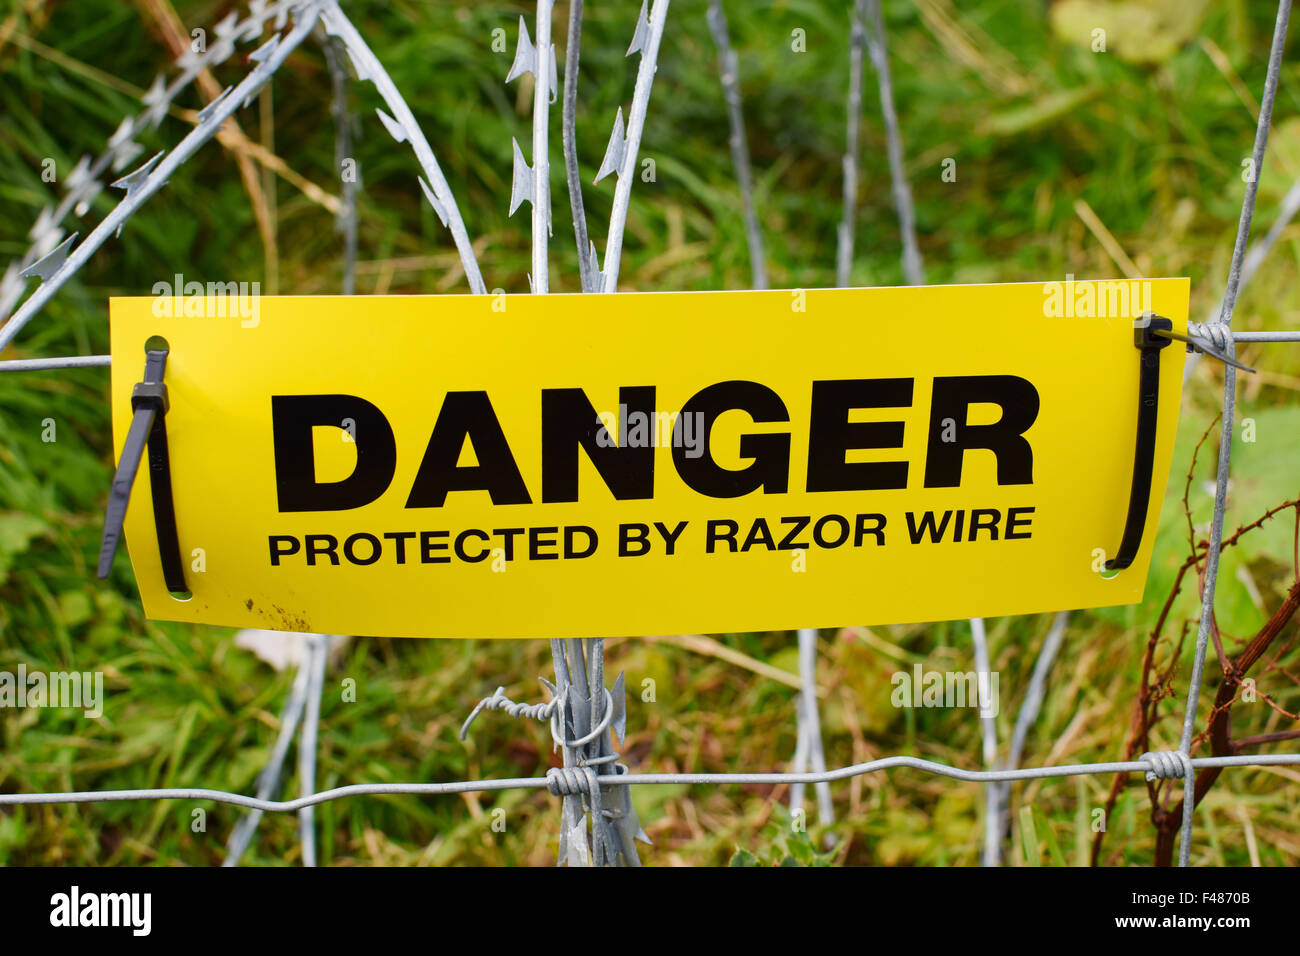 Danger razor wire warning sign. Stock Photo